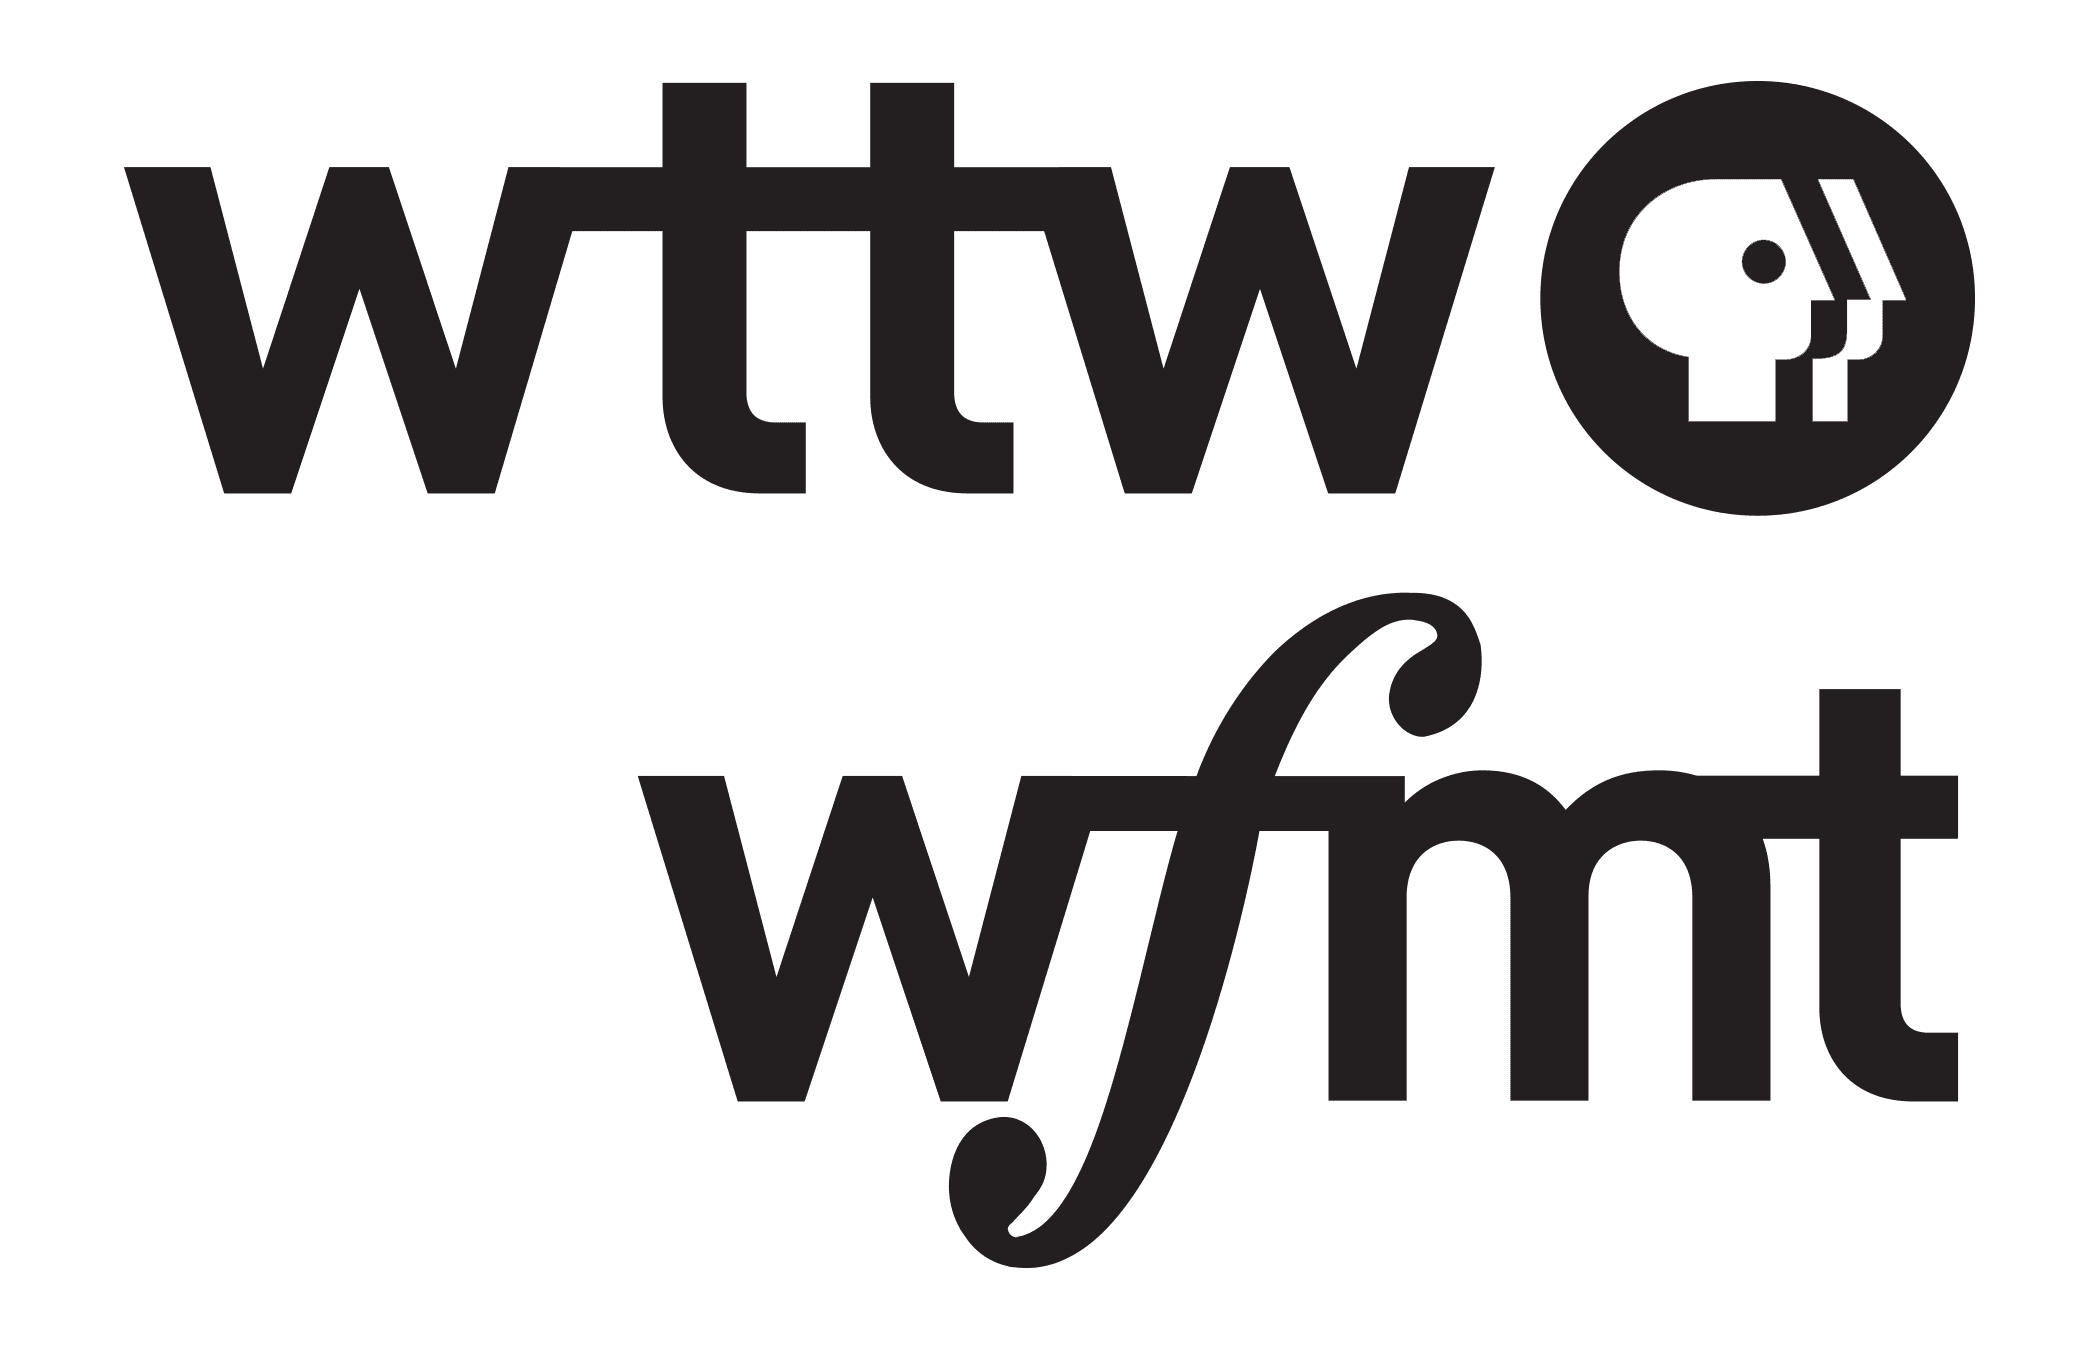 wttw wfmt - The Chicago Network